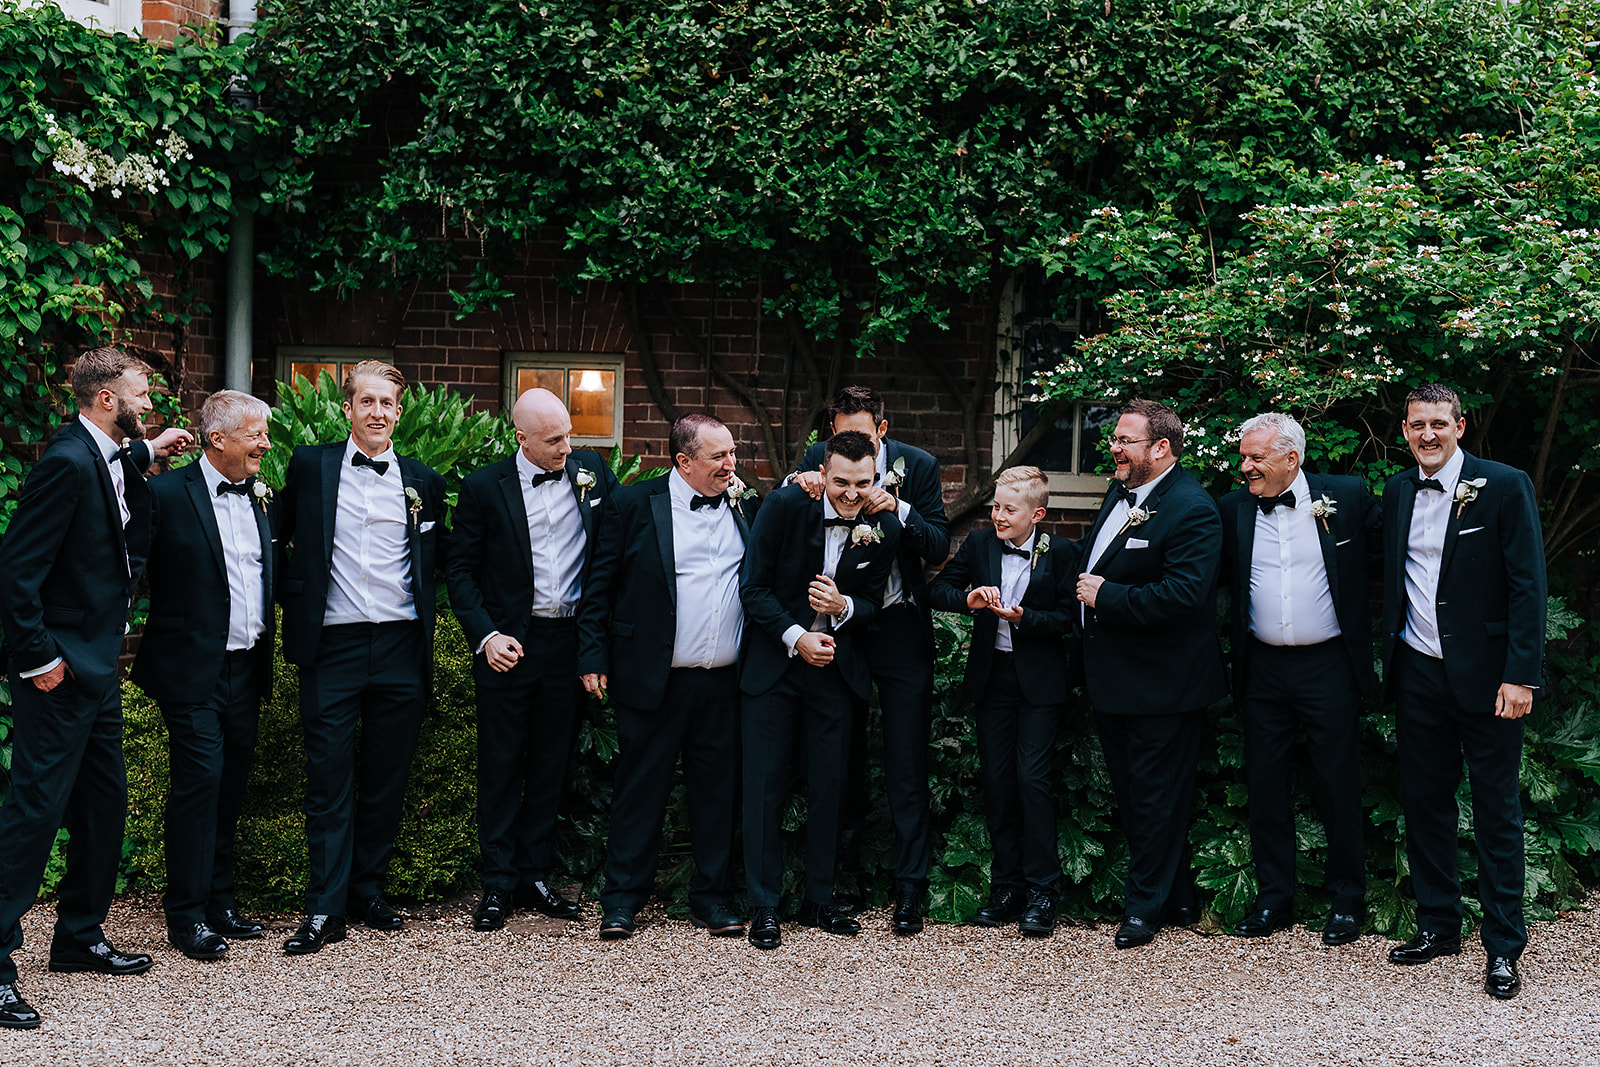 Bridal party group photos Hedingham Castle, Essex | Alex Buckland Photography